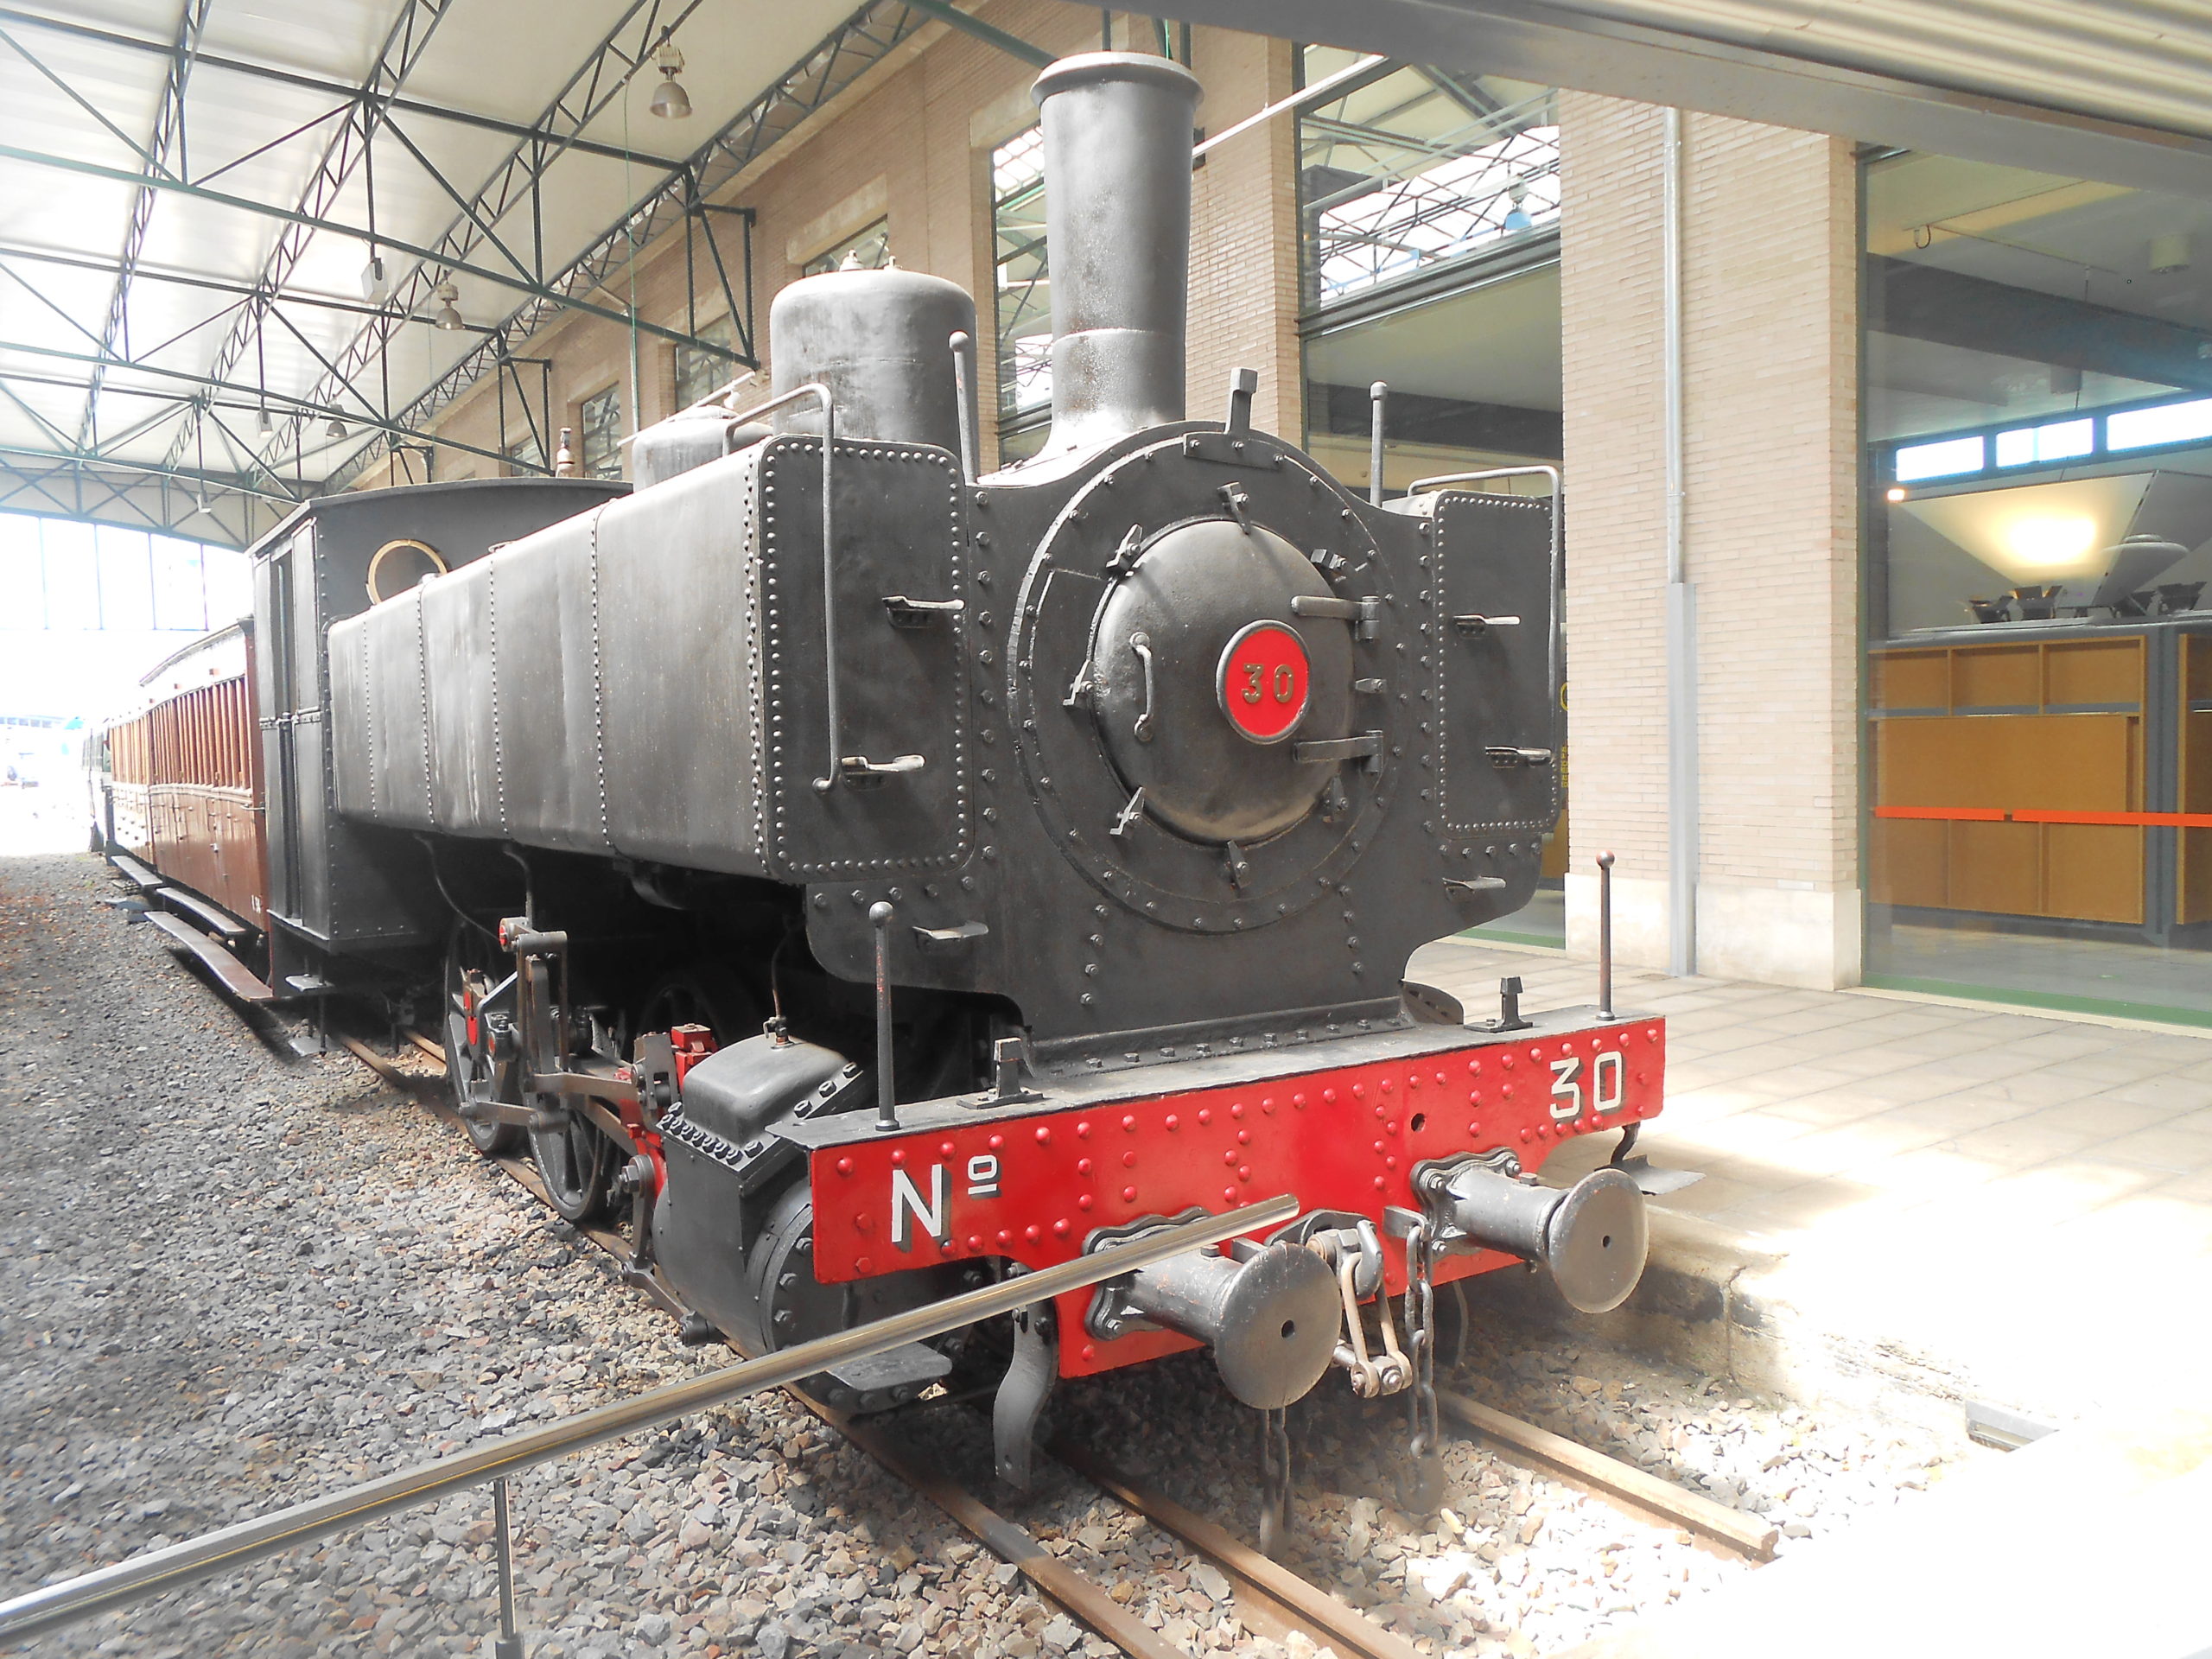 The Asturian Railway Museum in Gijón